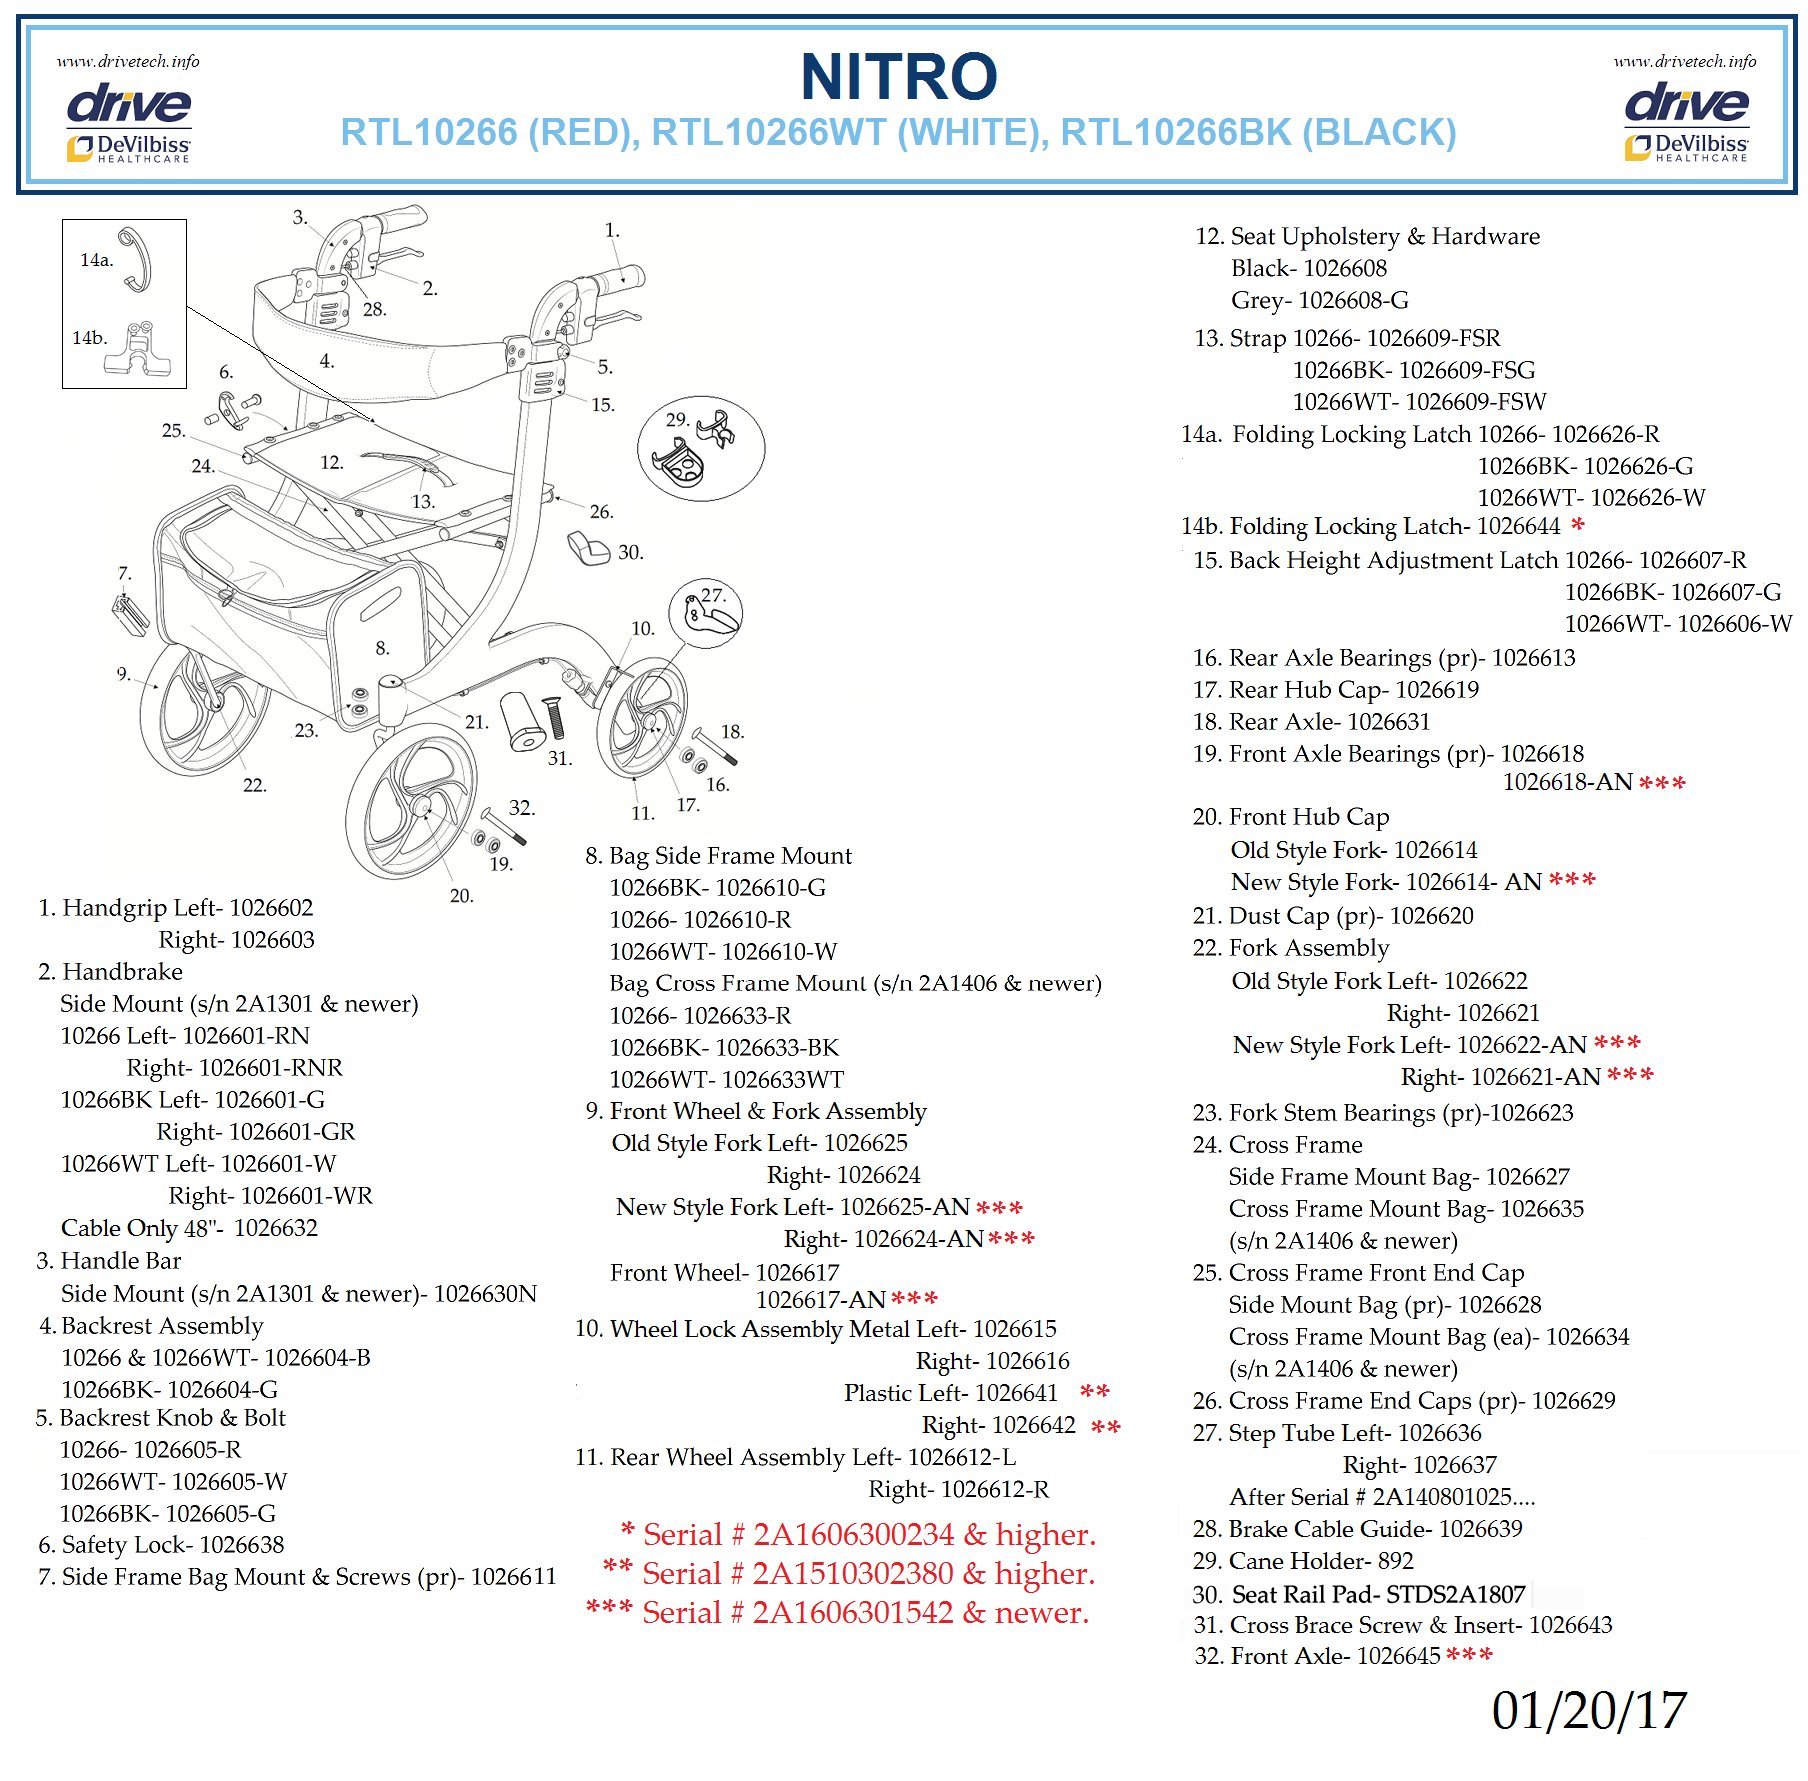 Drive Medical RTL10266BK Nitro Foldable Rollator Walker with Seat, Standard Height, Black